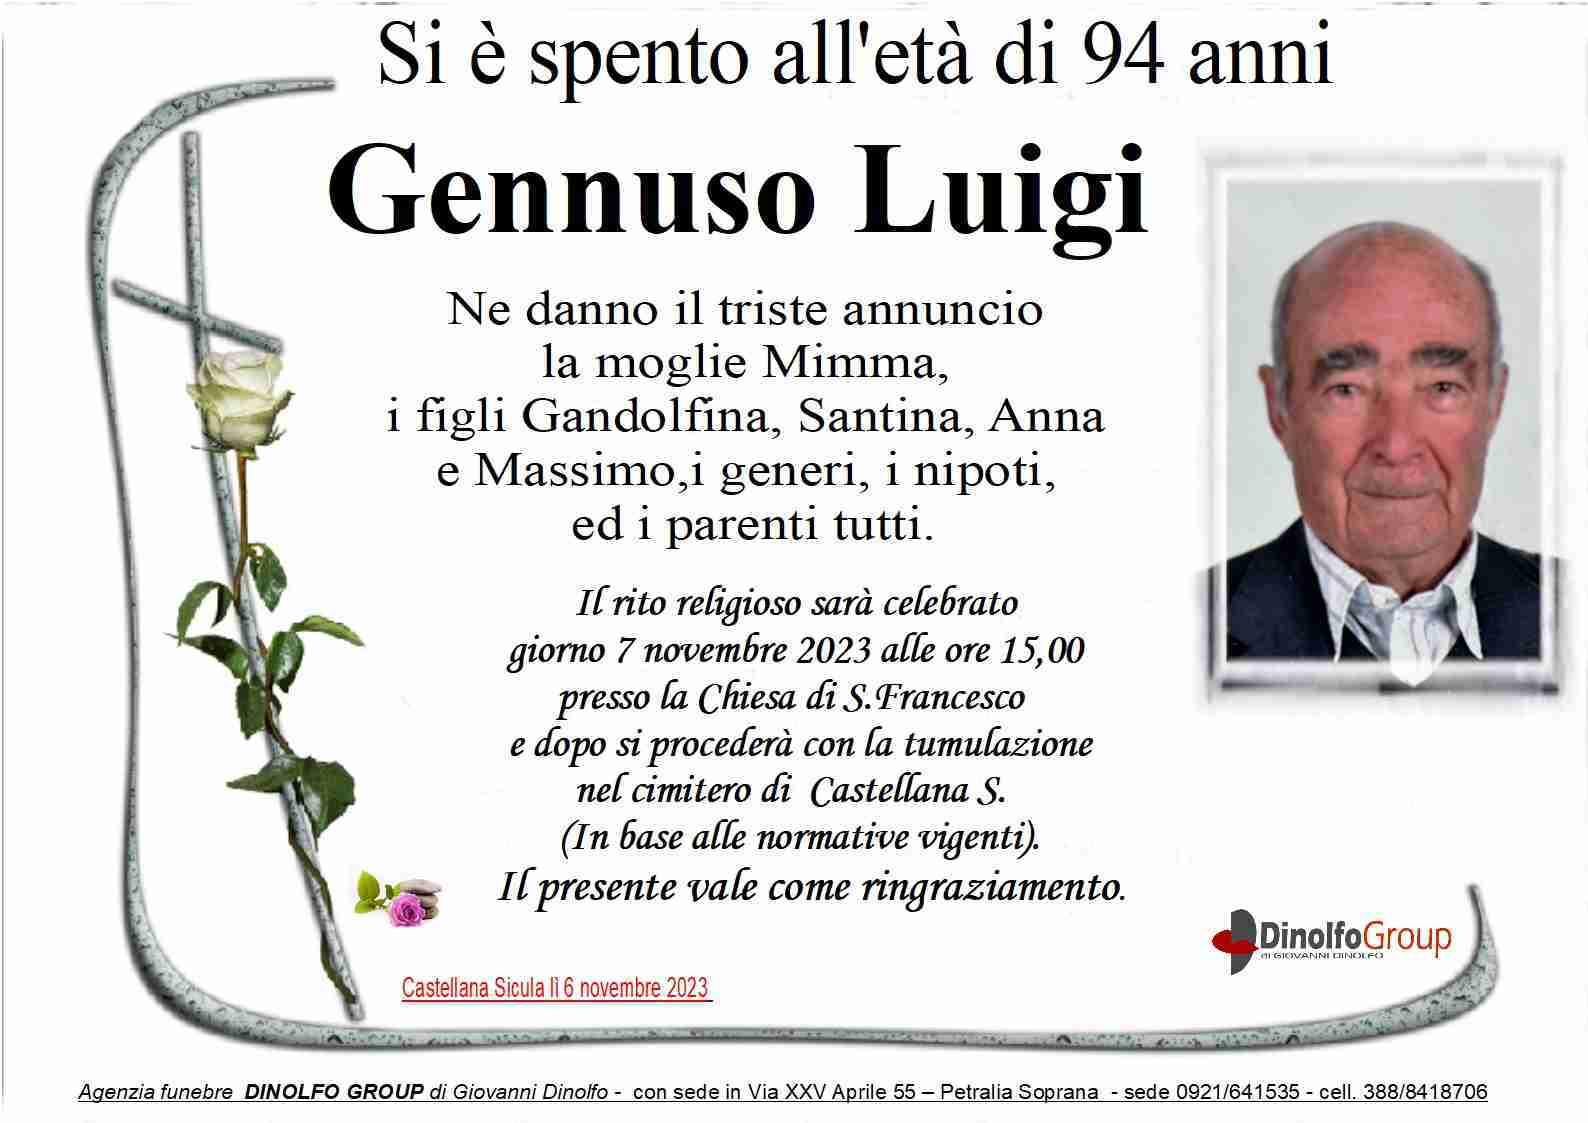 Luigi Gennuso